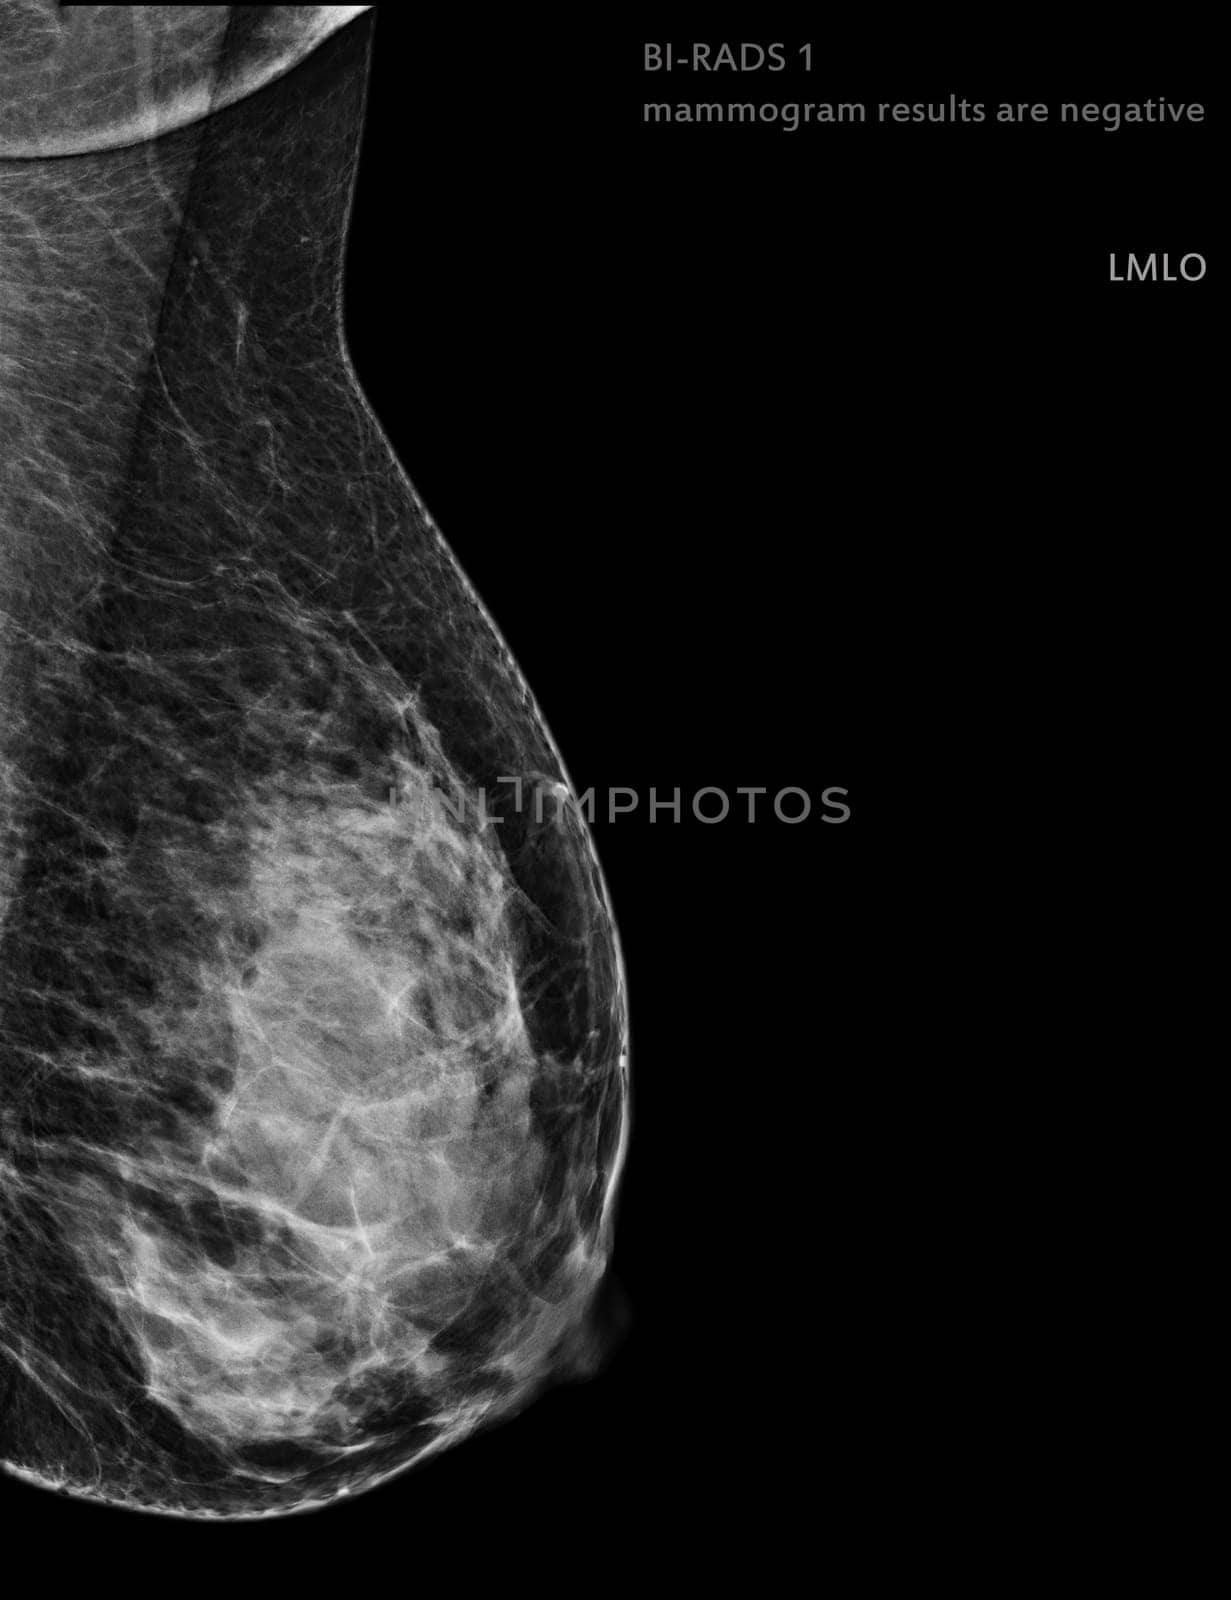  X-ray Digital Mammogram Right side MLO view .  by samunella